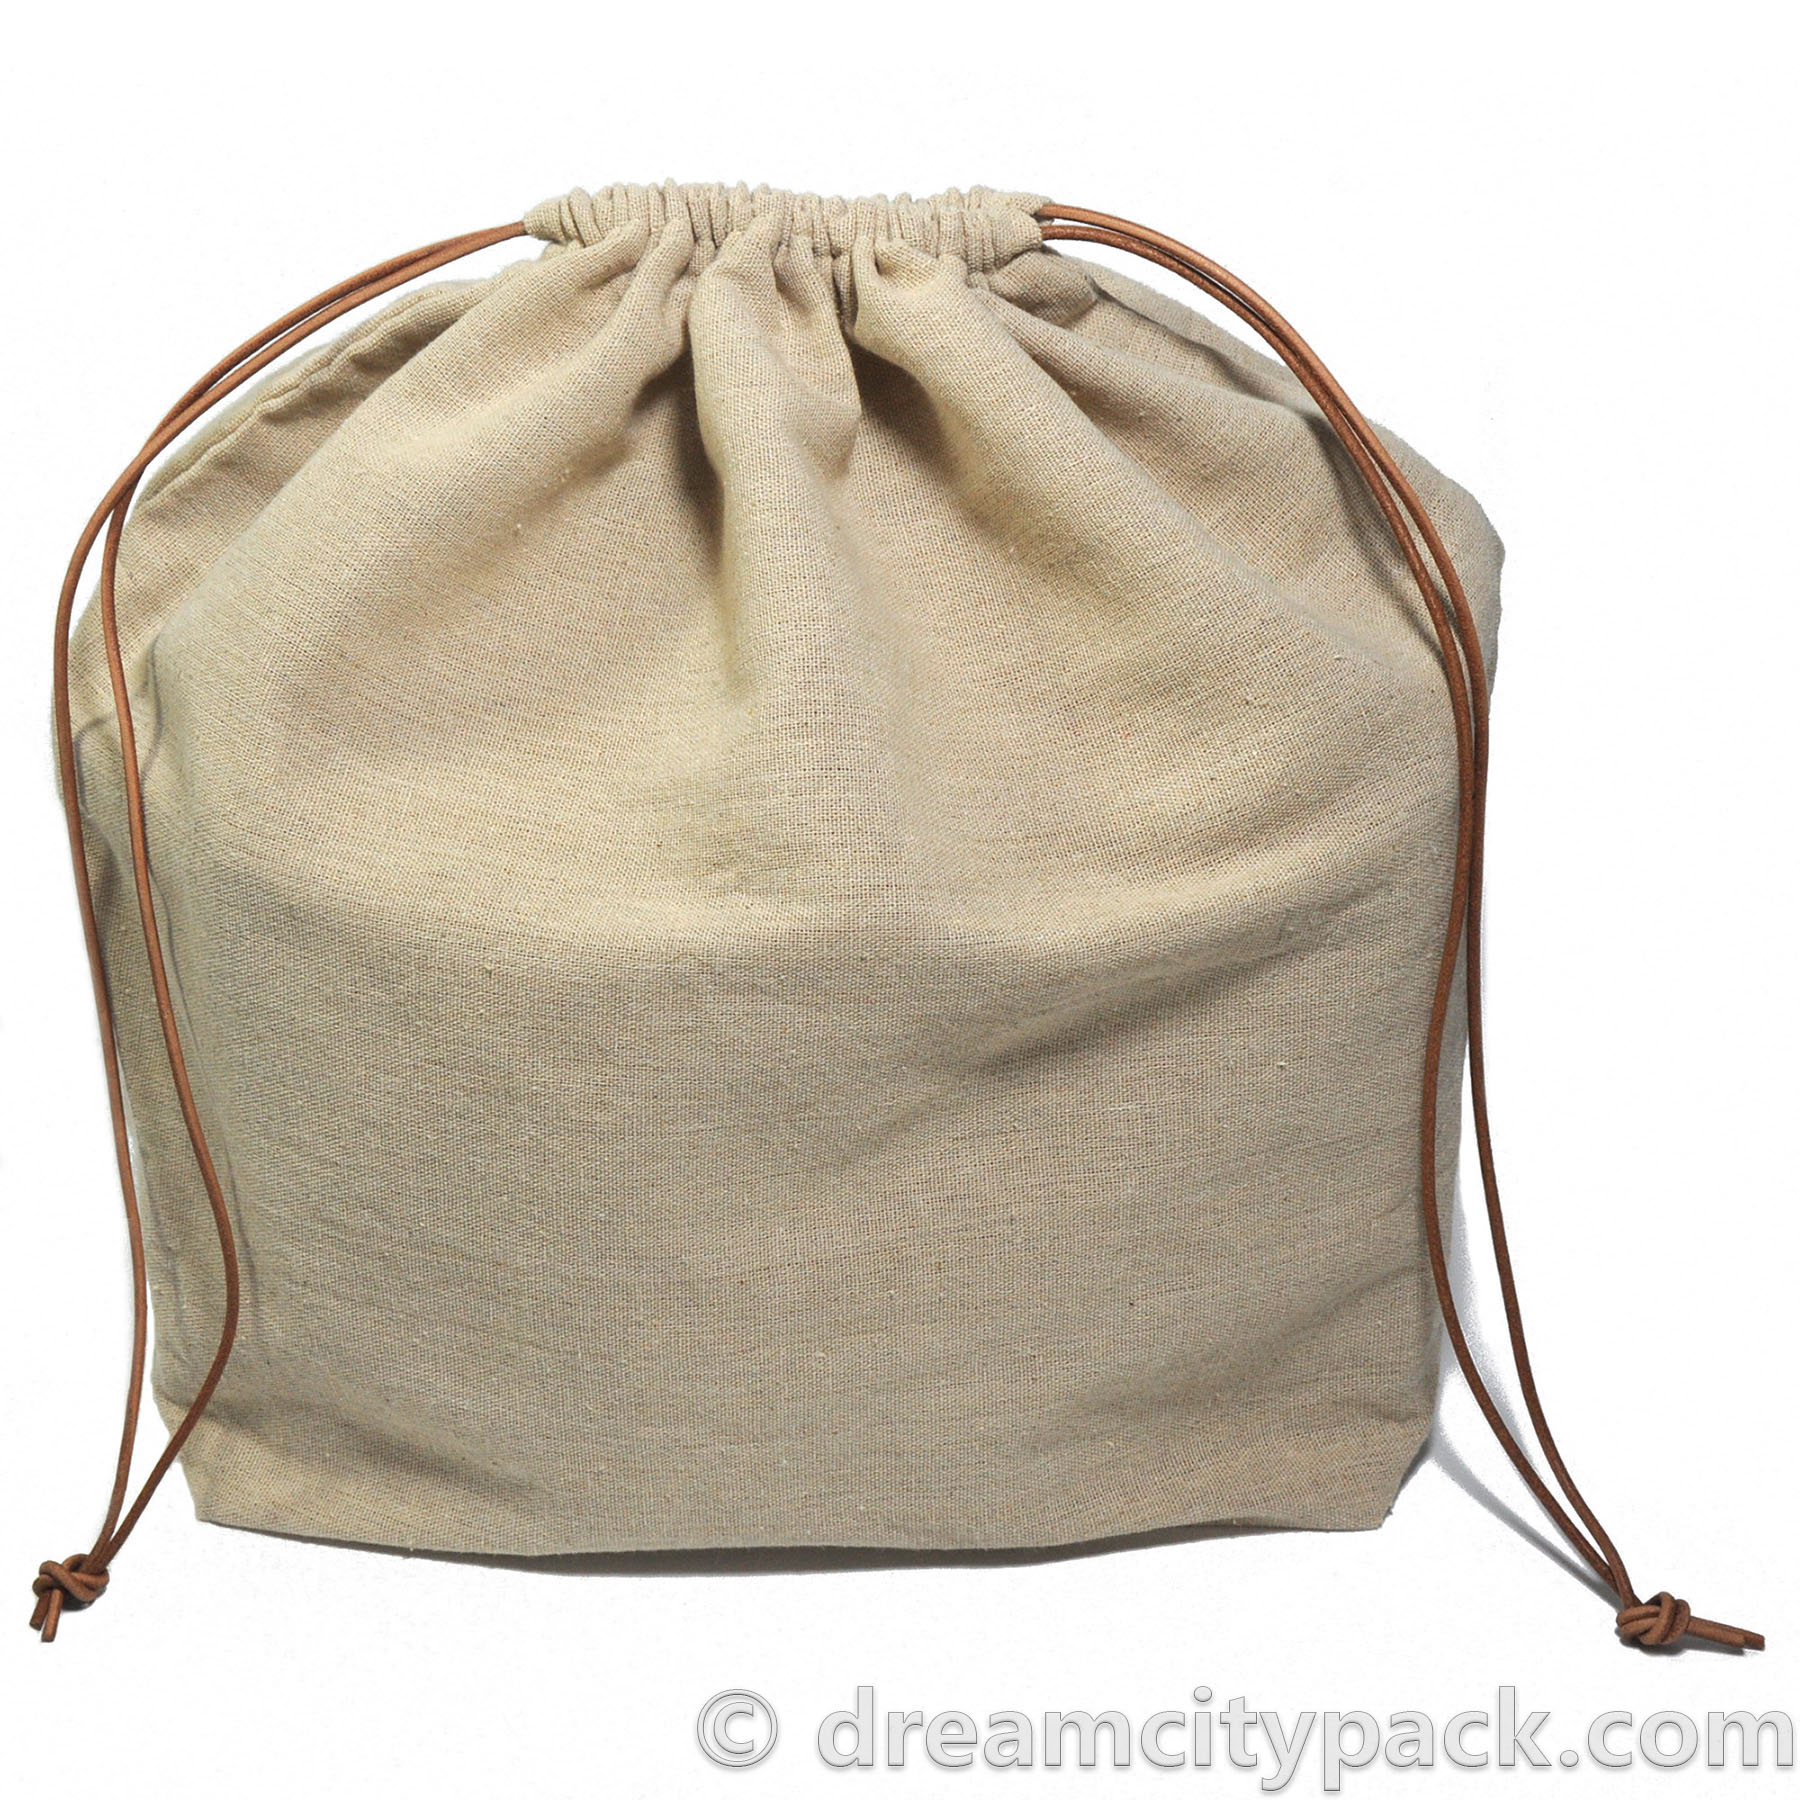 Large Linen Dust Bag for Handbags Jumbo Size with Gusseted Bottom